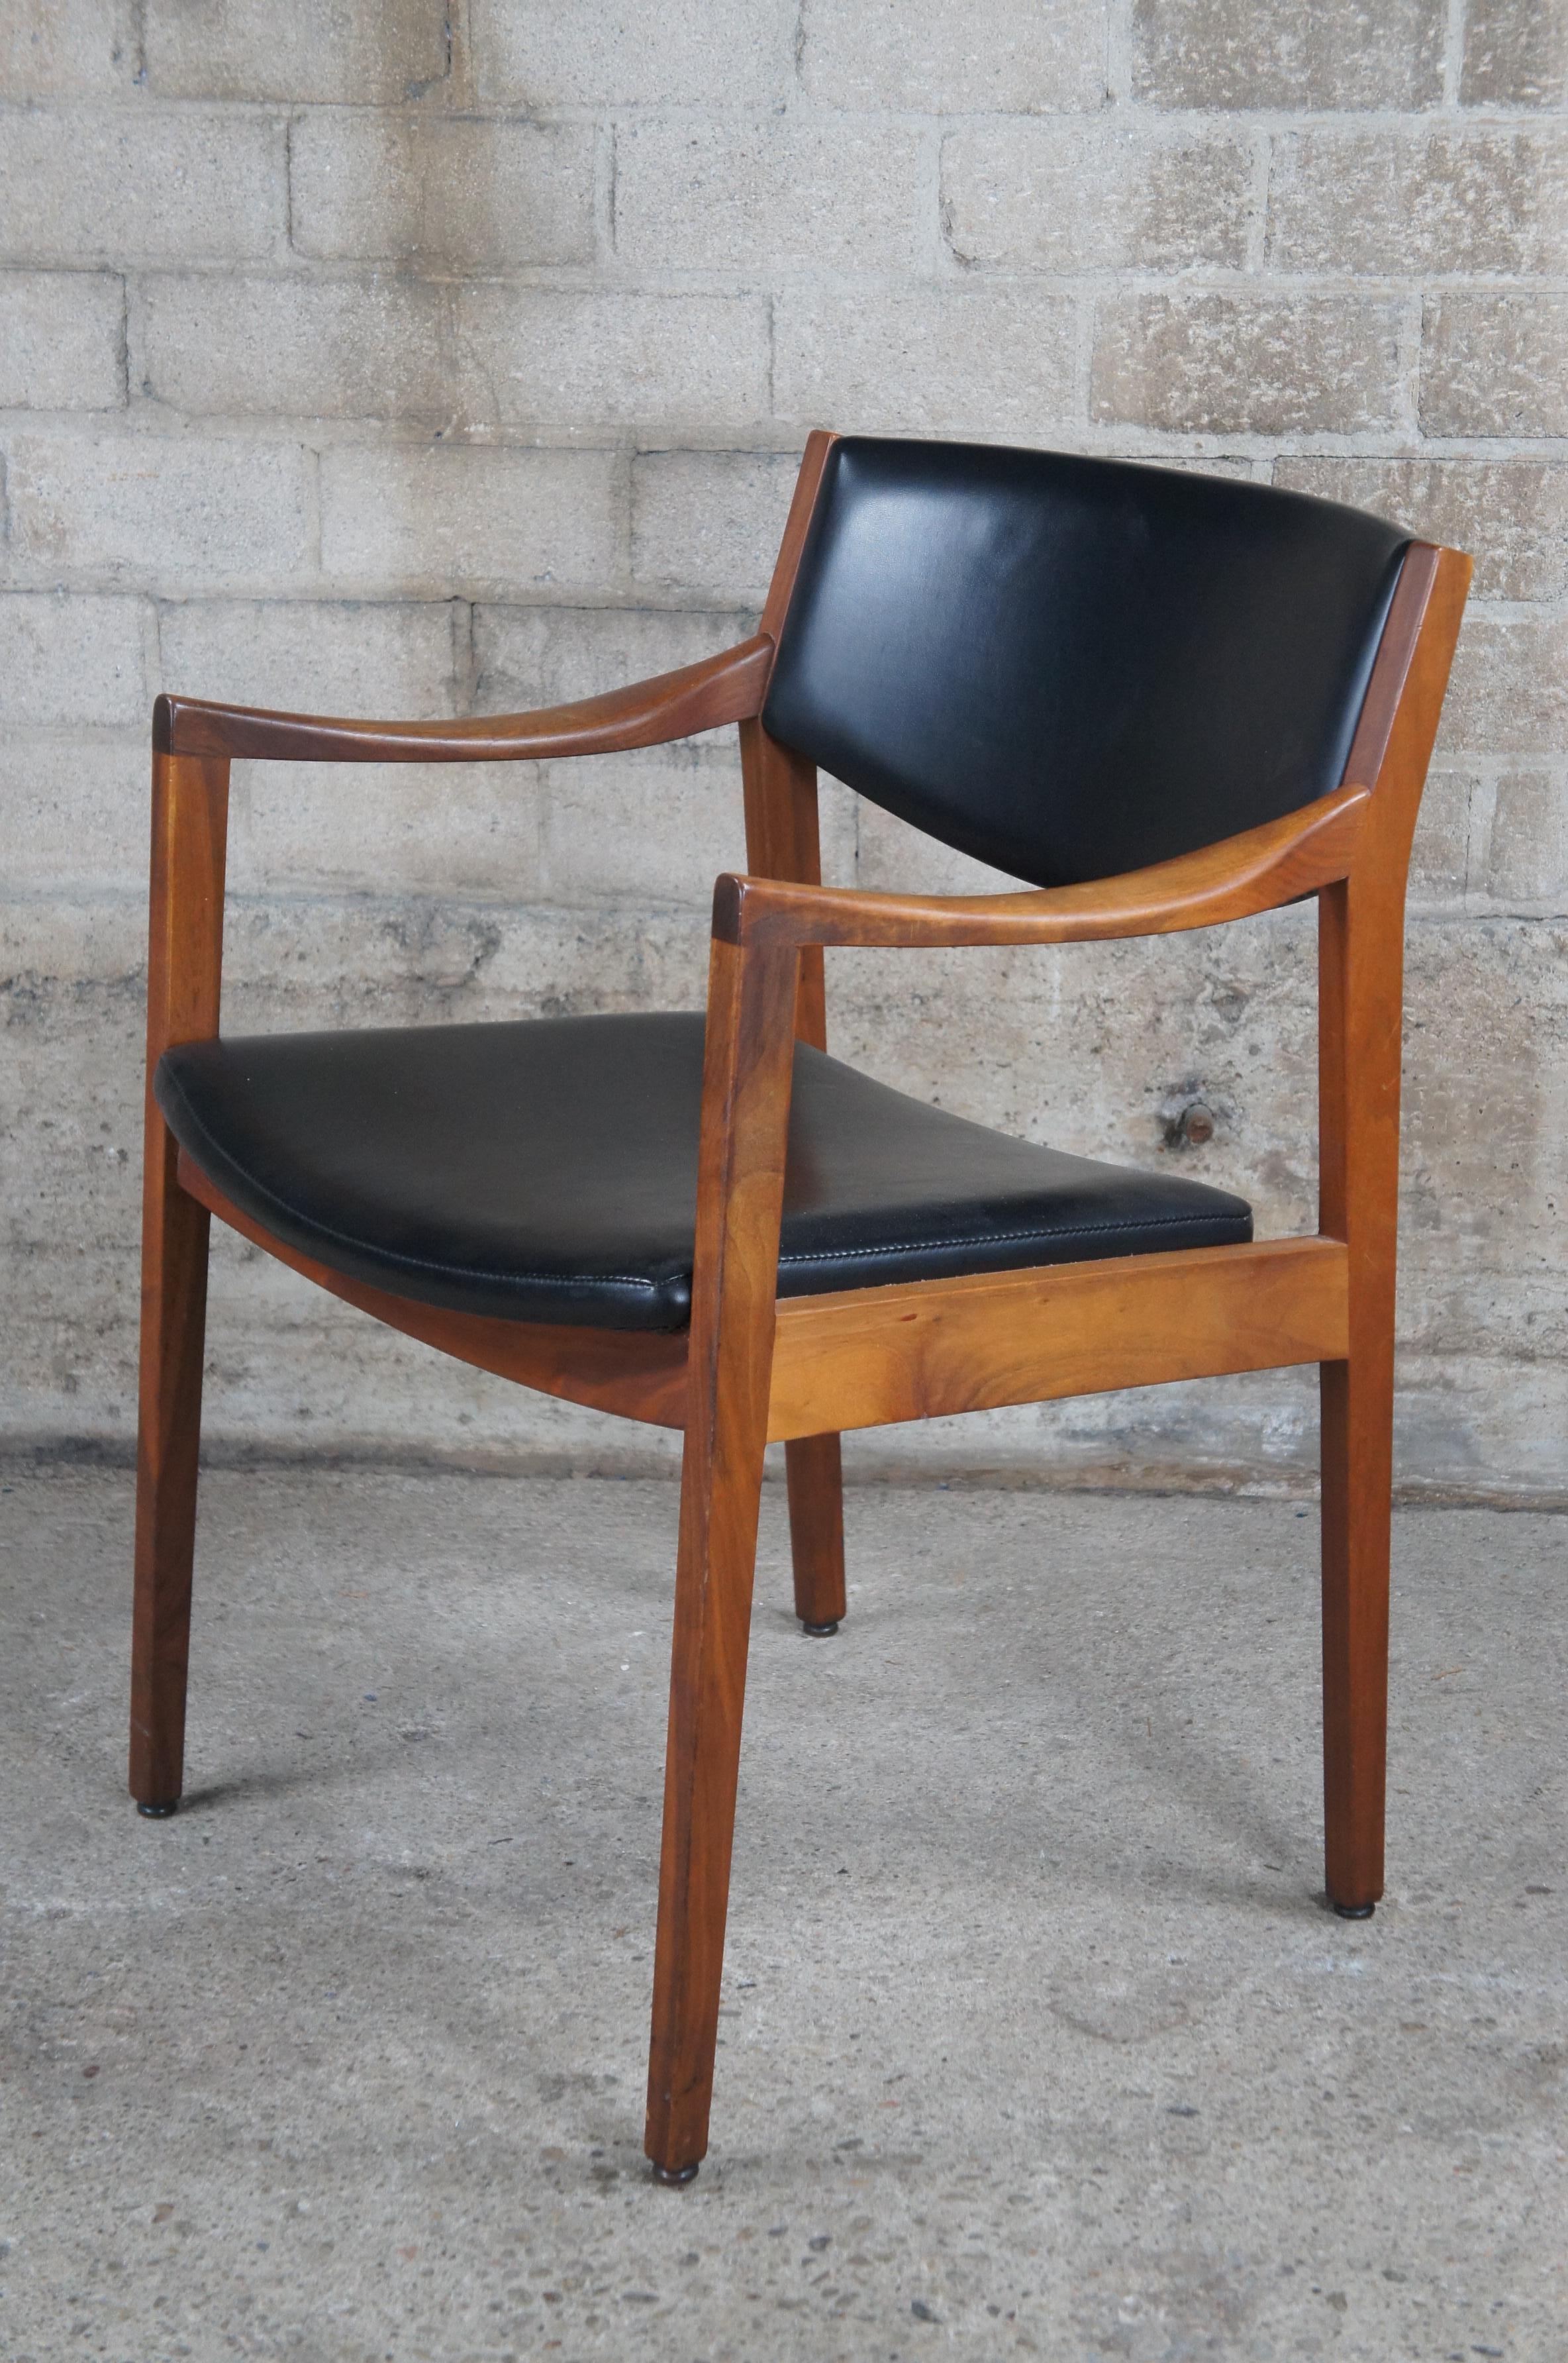 2 Gunlocke After Risom Mid Century Modern Danish Walnut & Leather Arms Chairs  For Sale 1